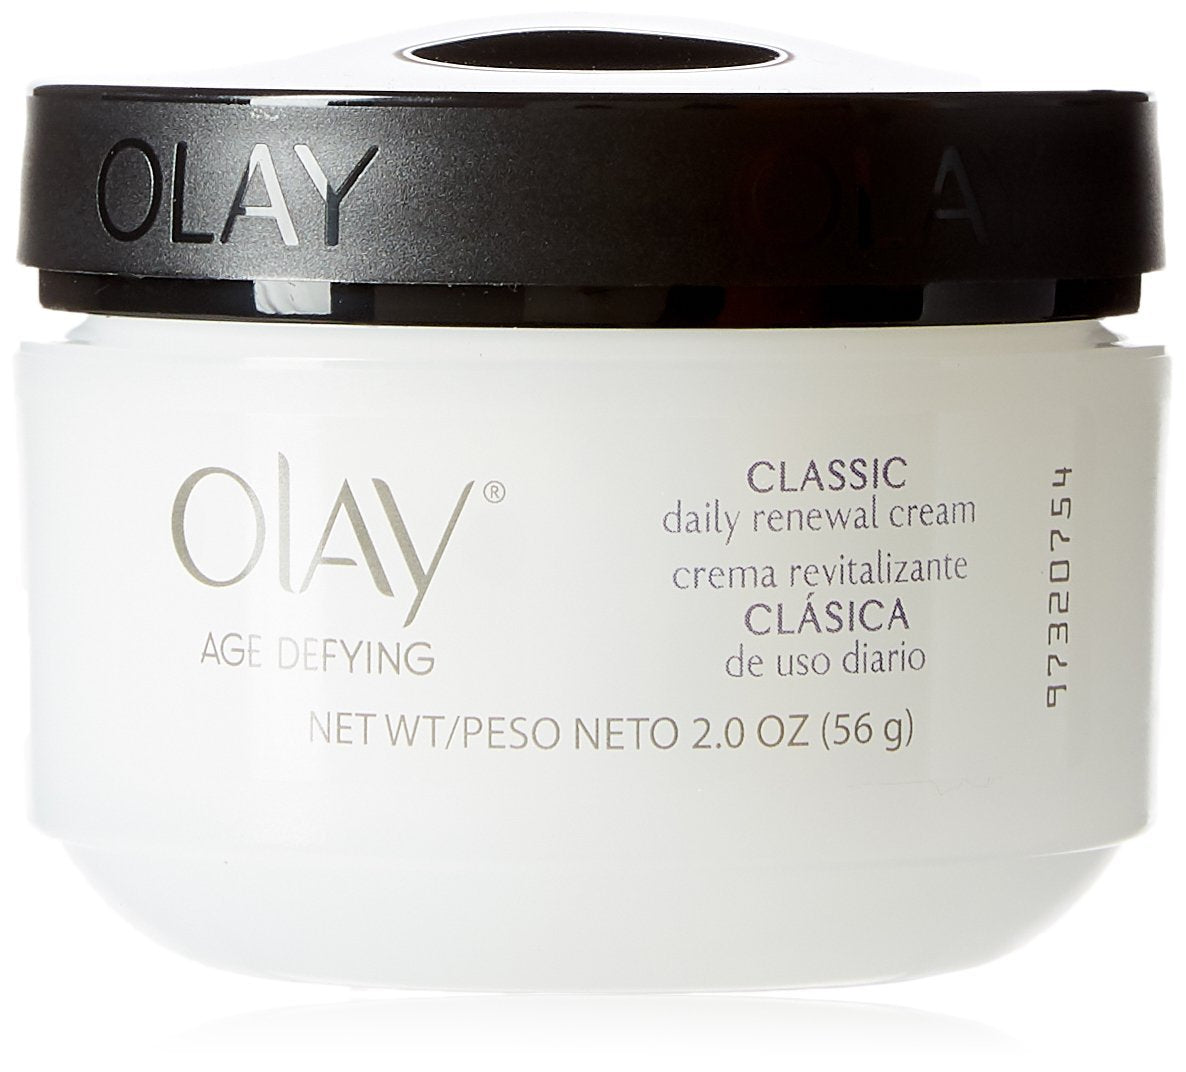 Olay Age Classic Daily Renewal Cream, 2 oz